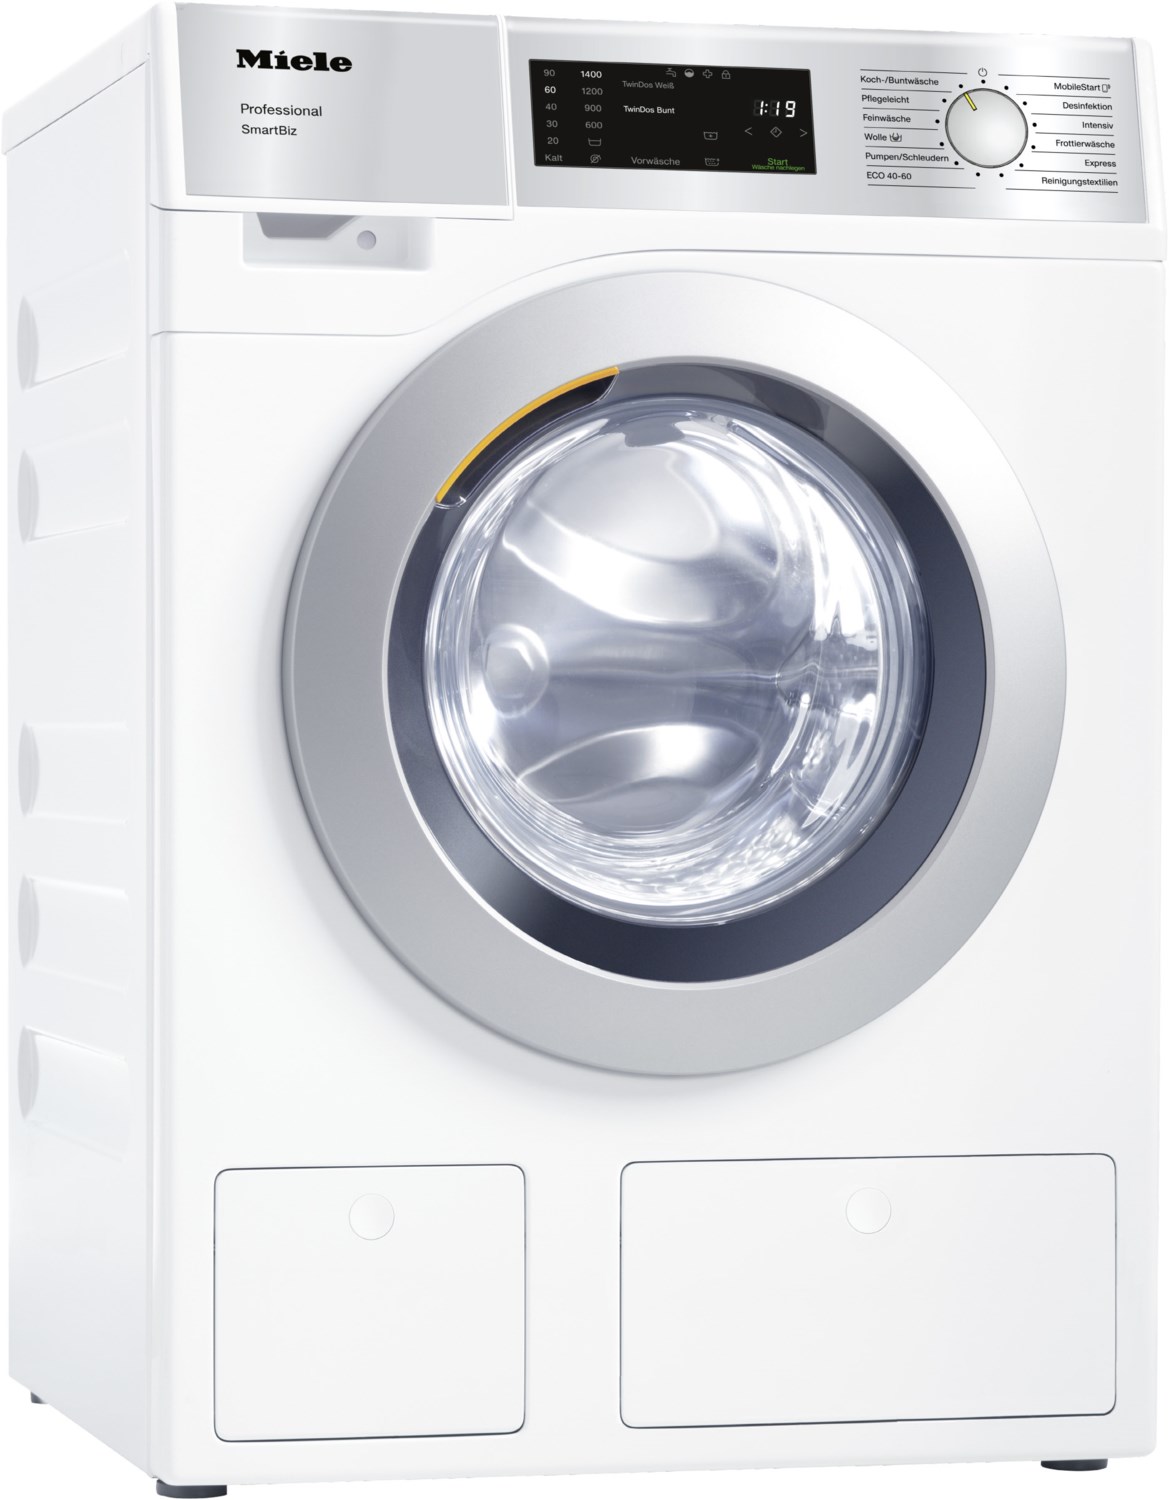 Image of PWM 1108 SmartBiz [EL DP TDos) Gewerbe Waschmaschine / A